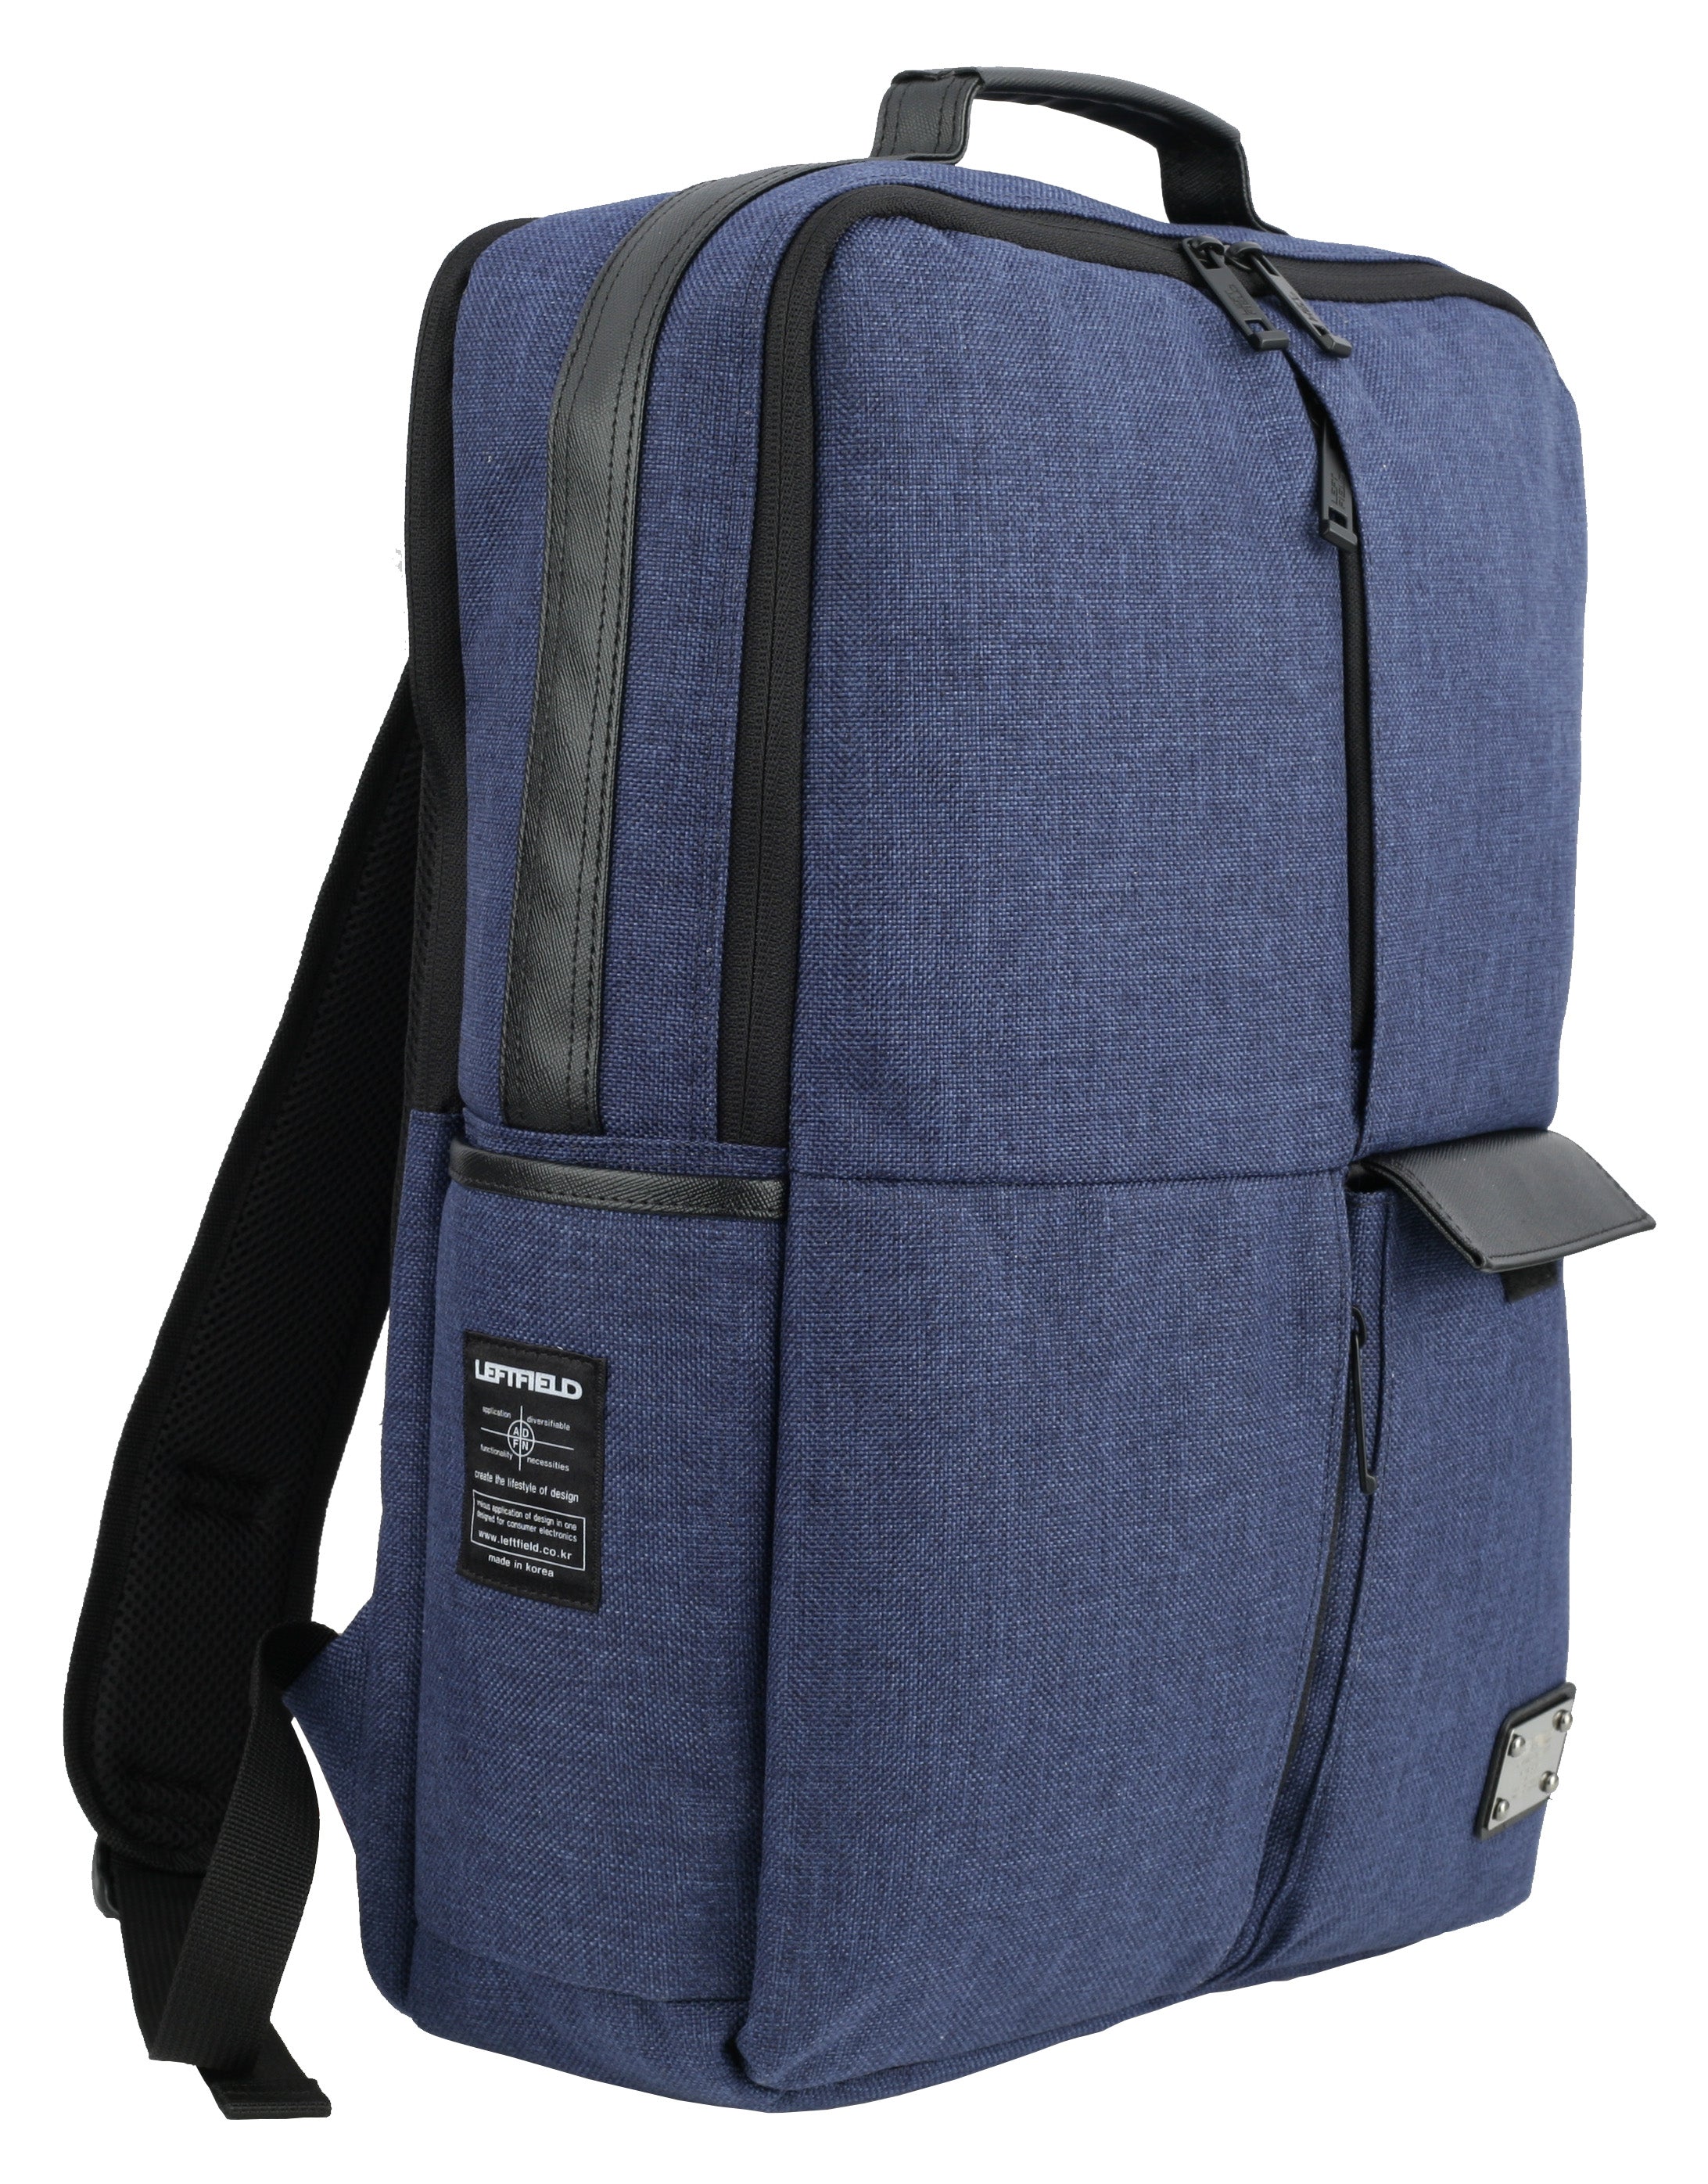 Navy Blue Canvas Casual Daypacks School Backpacks